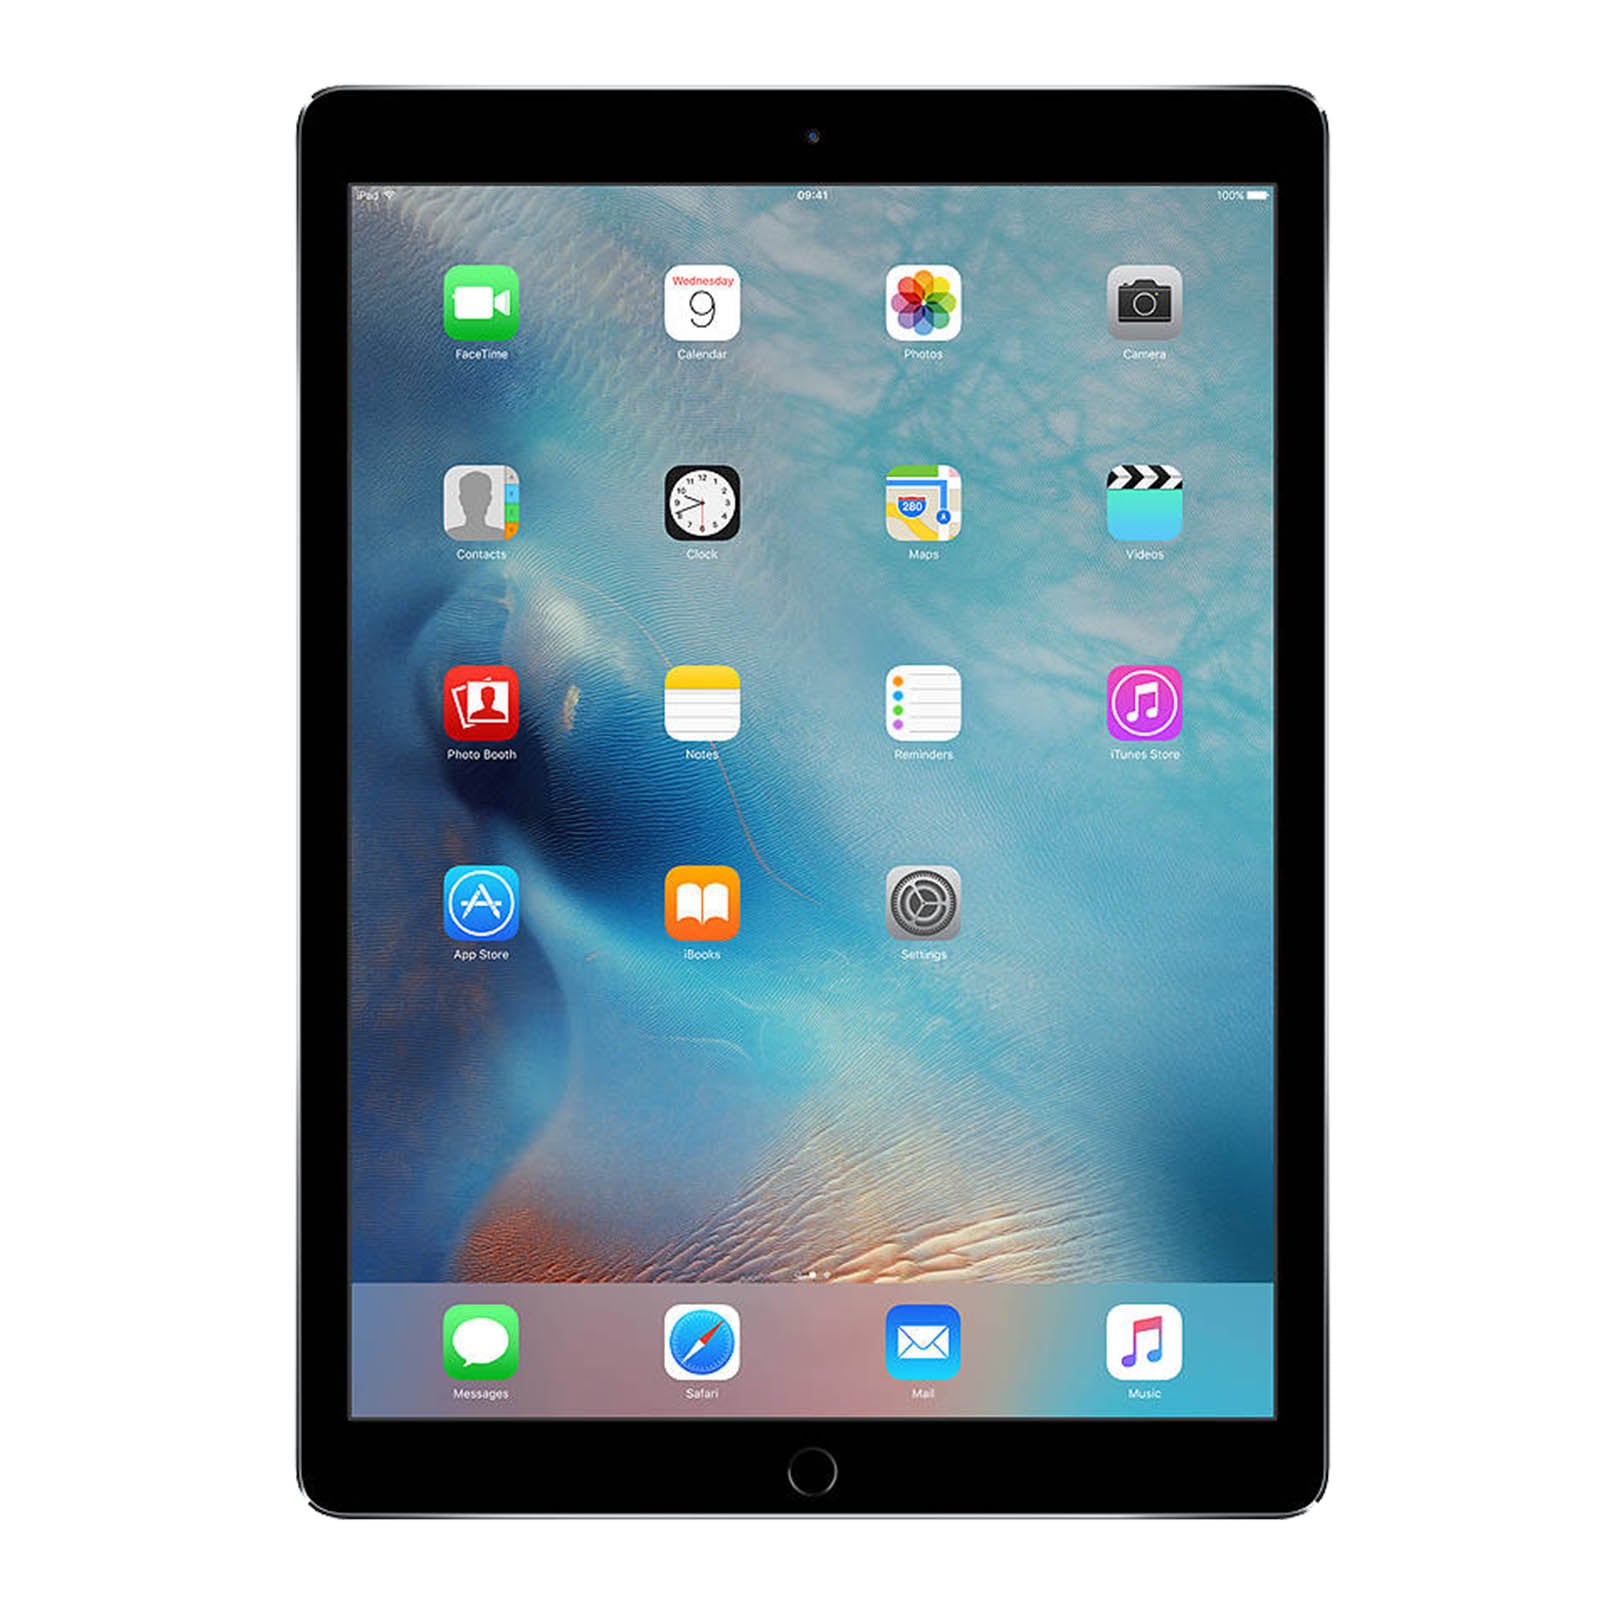 iPad Pro 12.9 Inch 3rd Gen 512GB Space Grey Very Good - WiFi